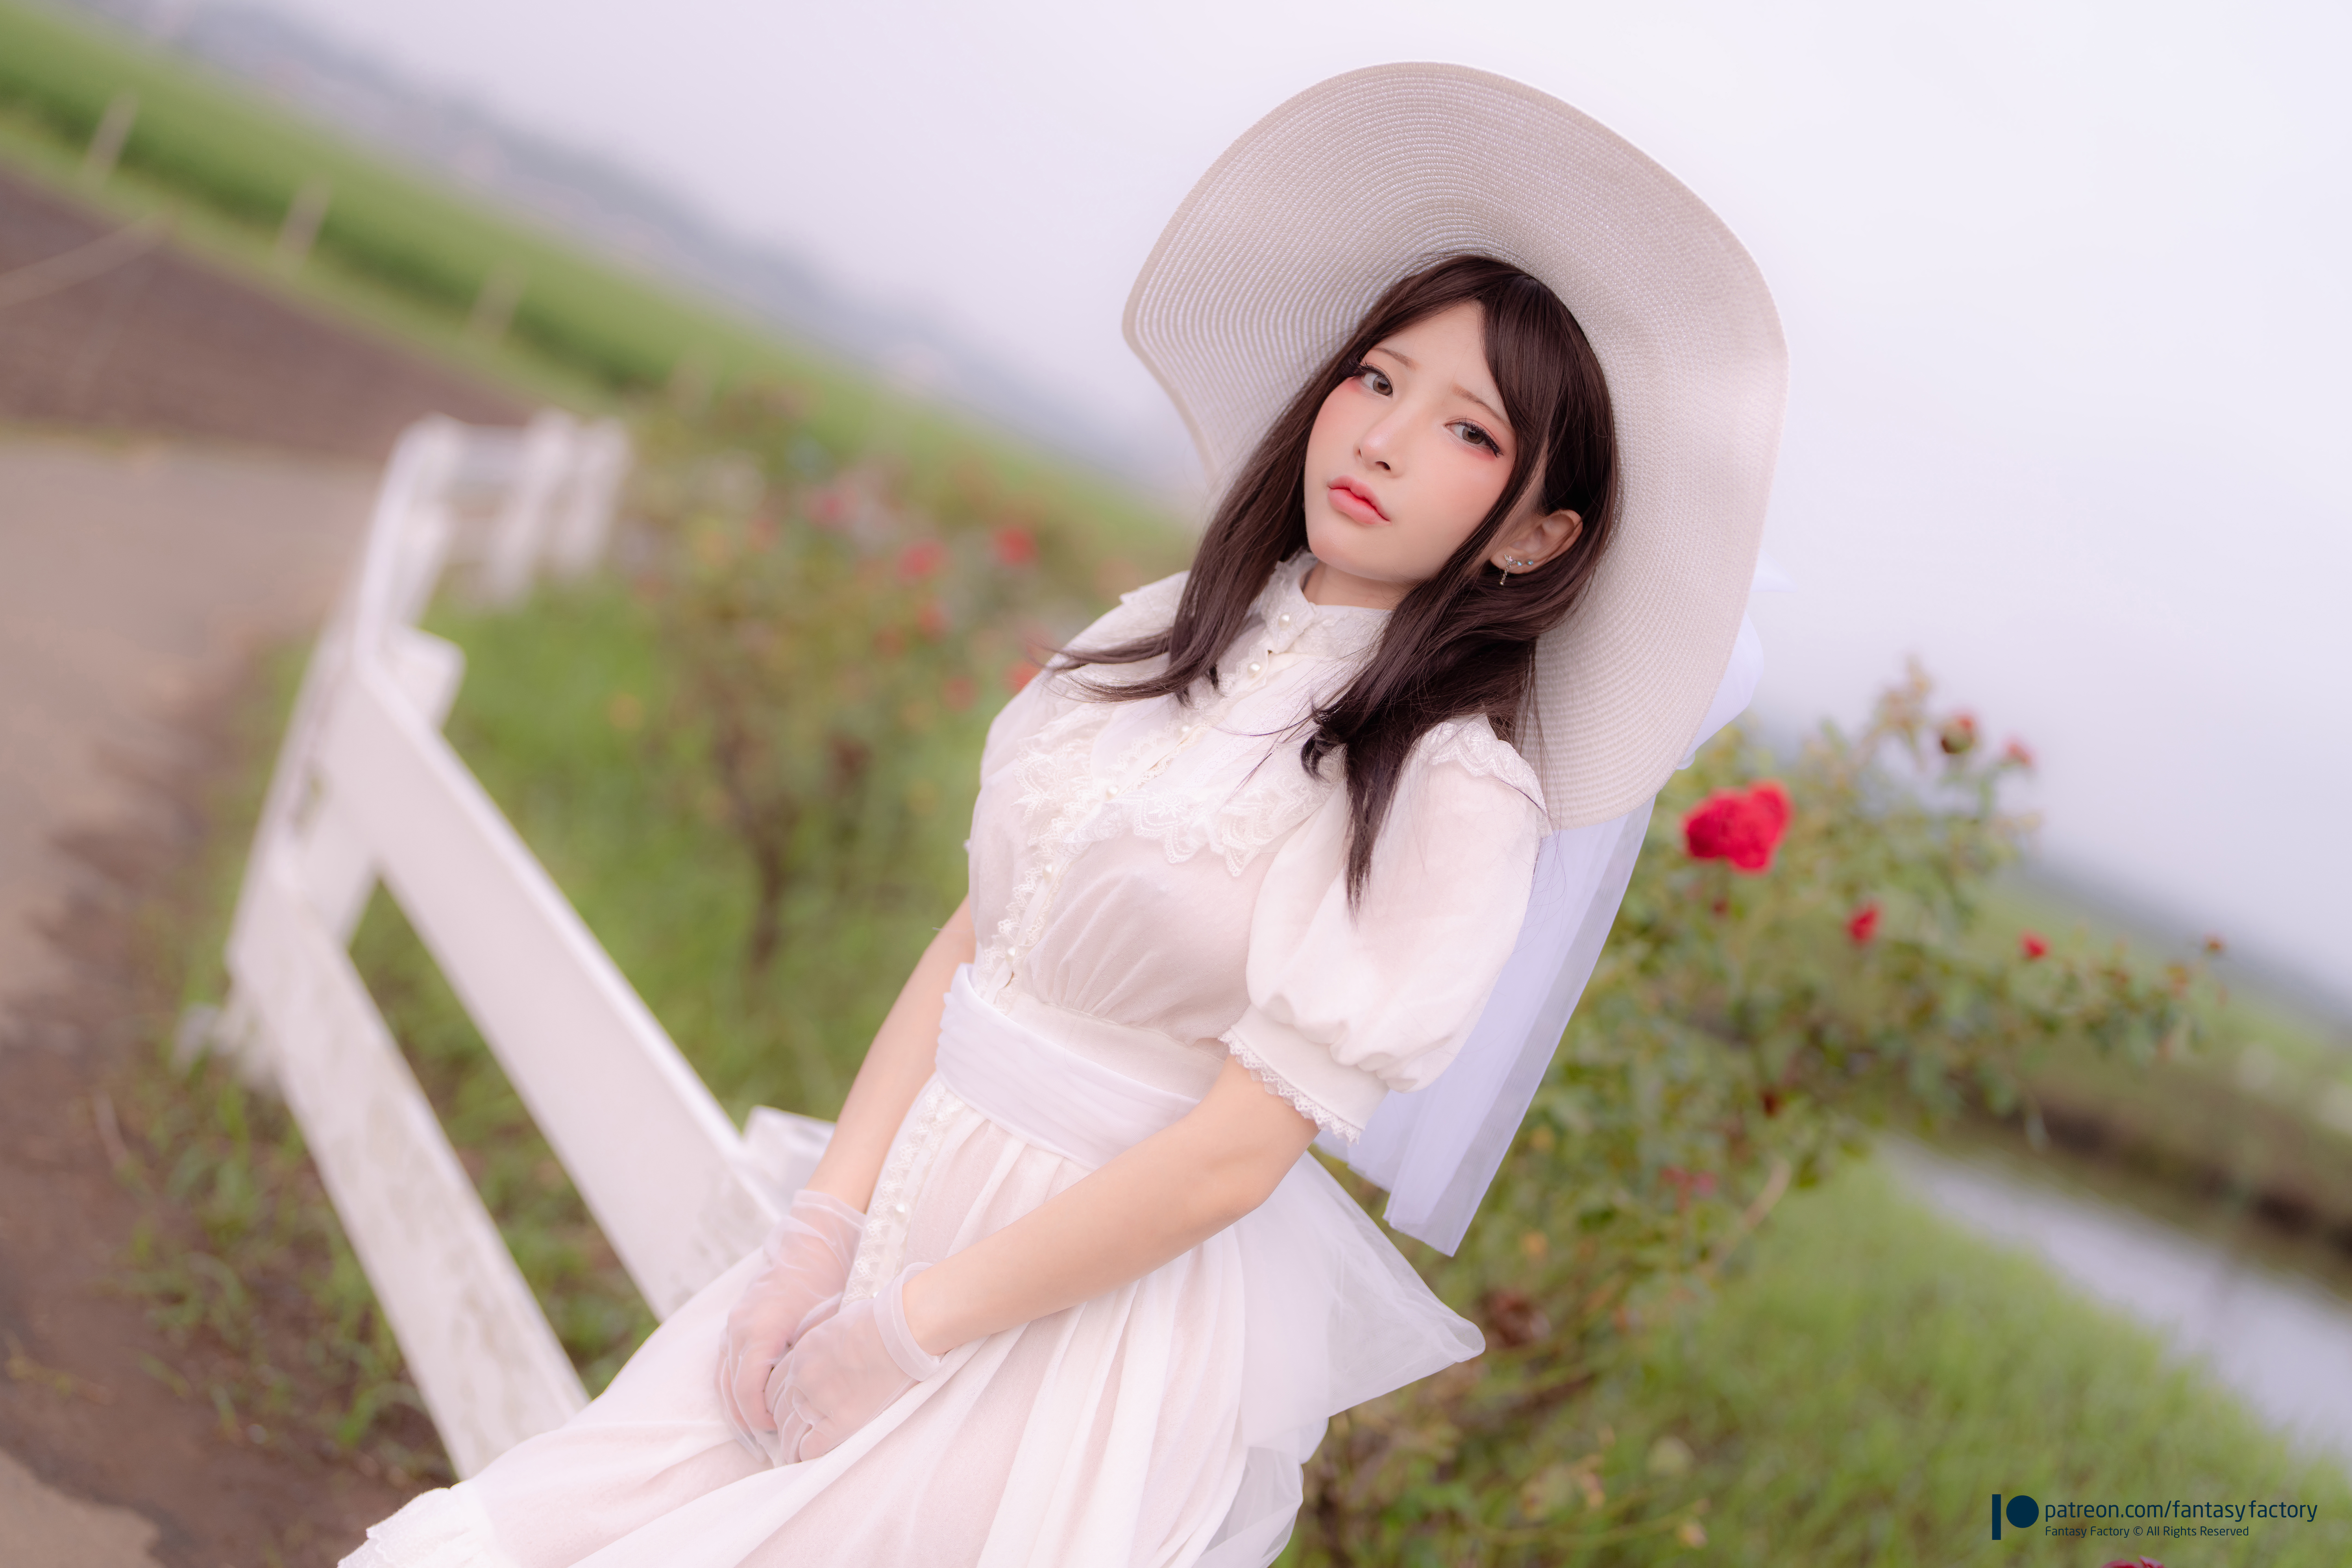 People 8640x5760 Fantasy Factory women model Asian women outdoors women with hats dress white clothing